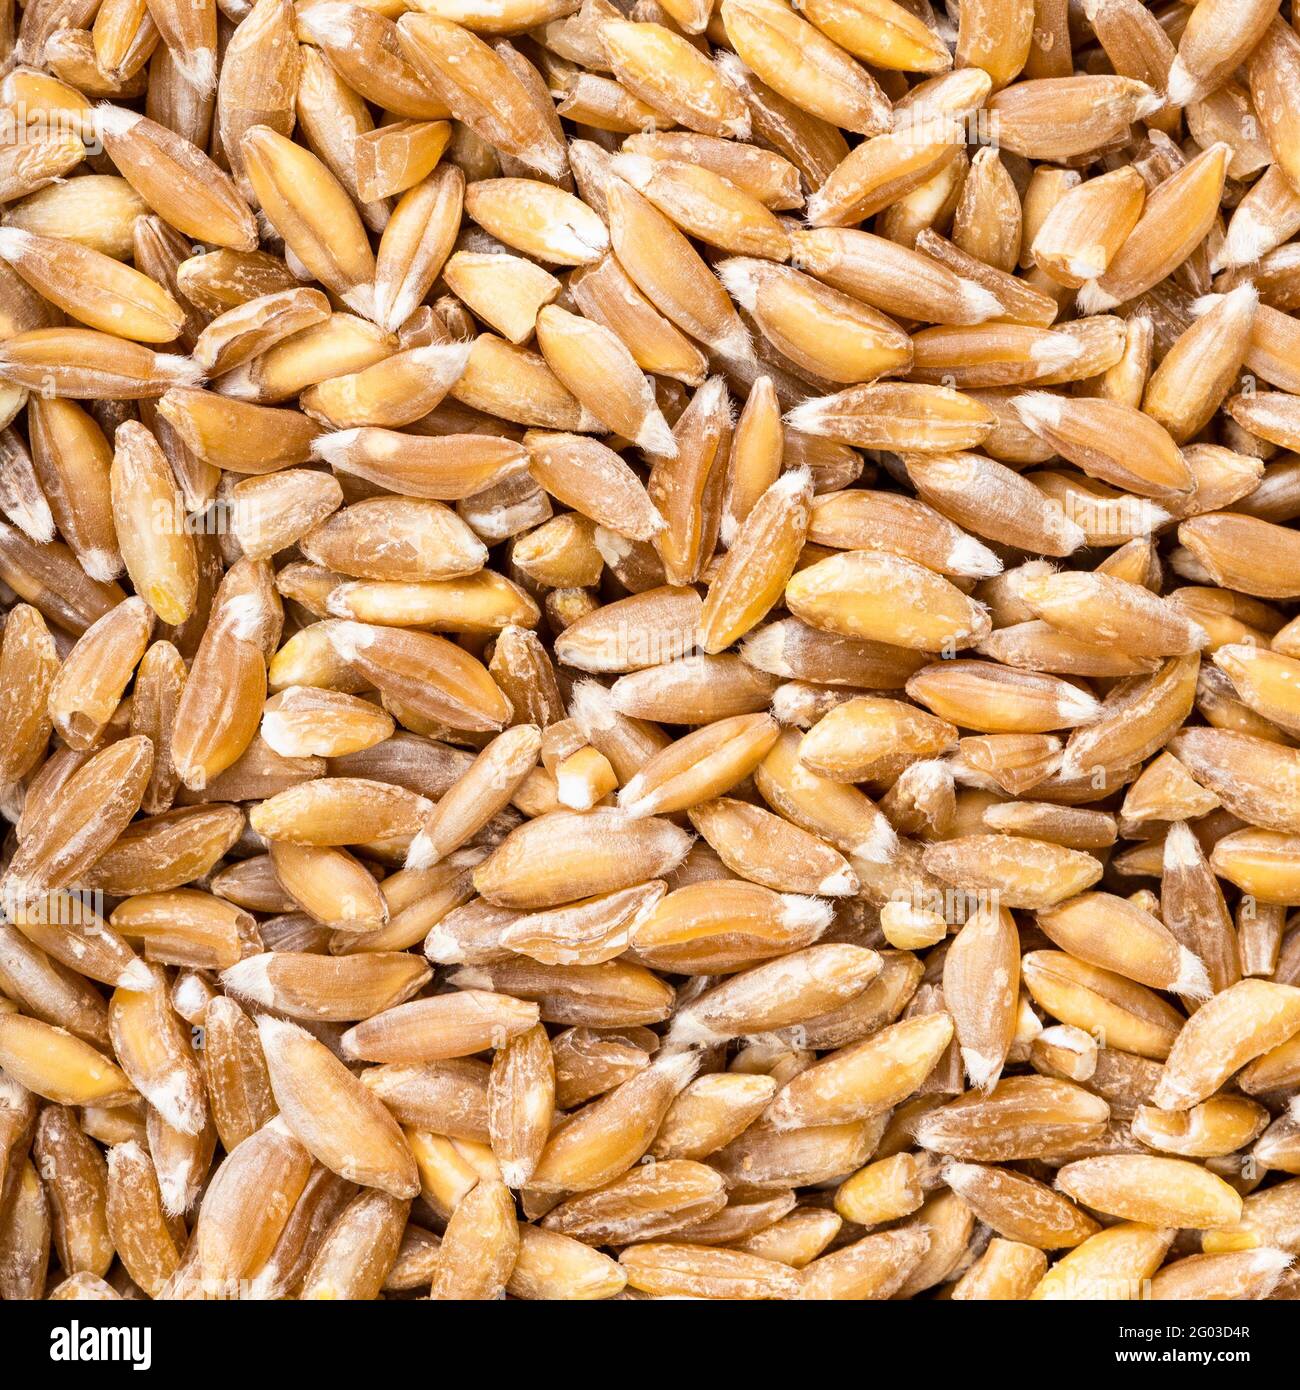 Textura de grano de trigo foto de archivo. Imagen de comida - 187567368